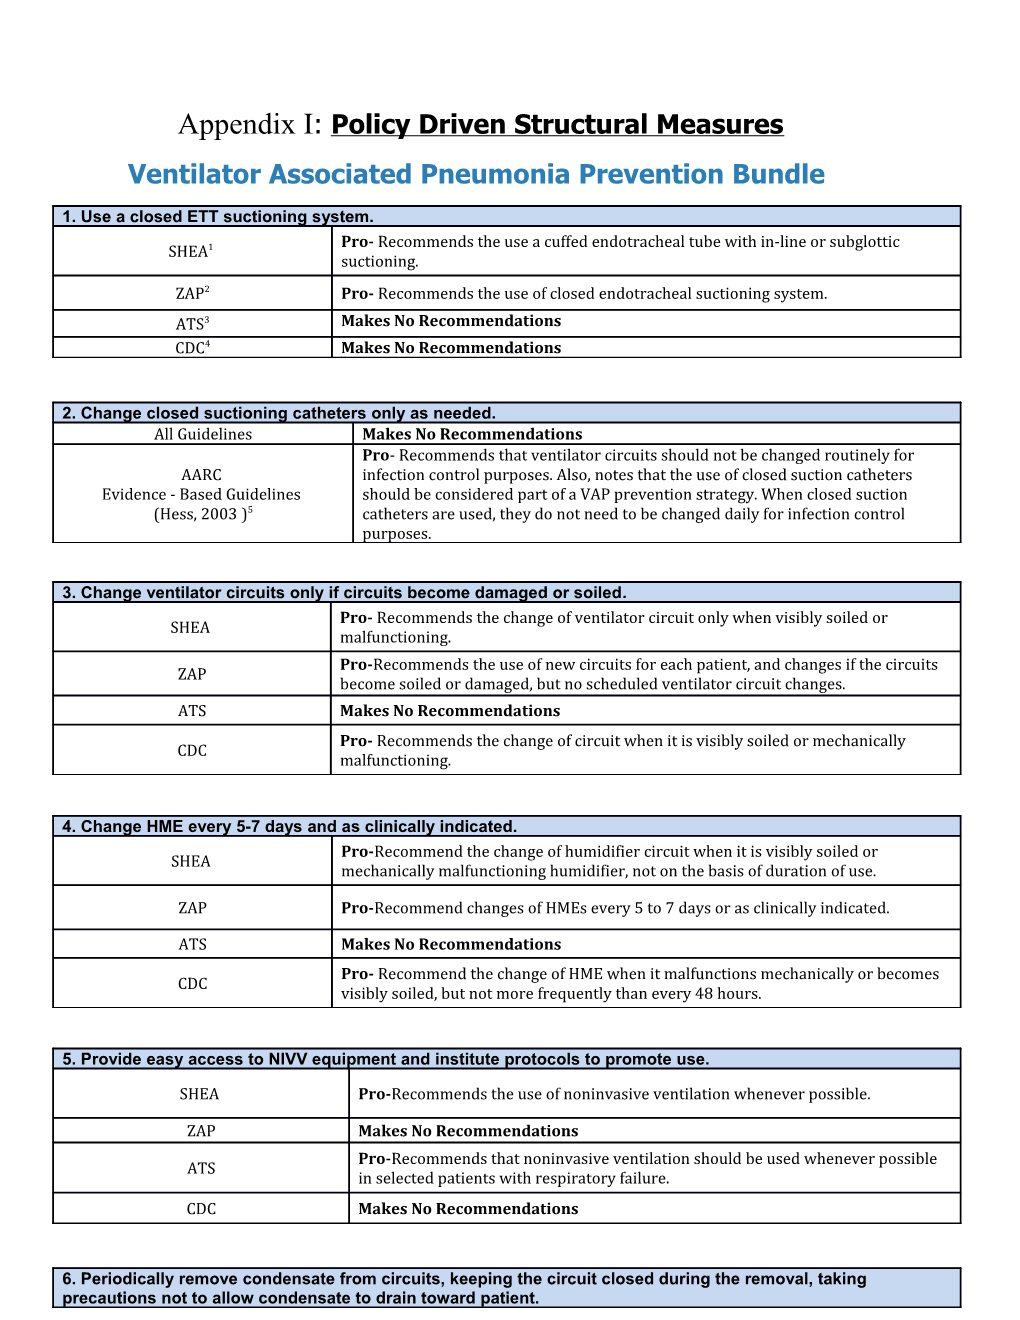 Ventilator Associated Pneumonia Prevention Bundle